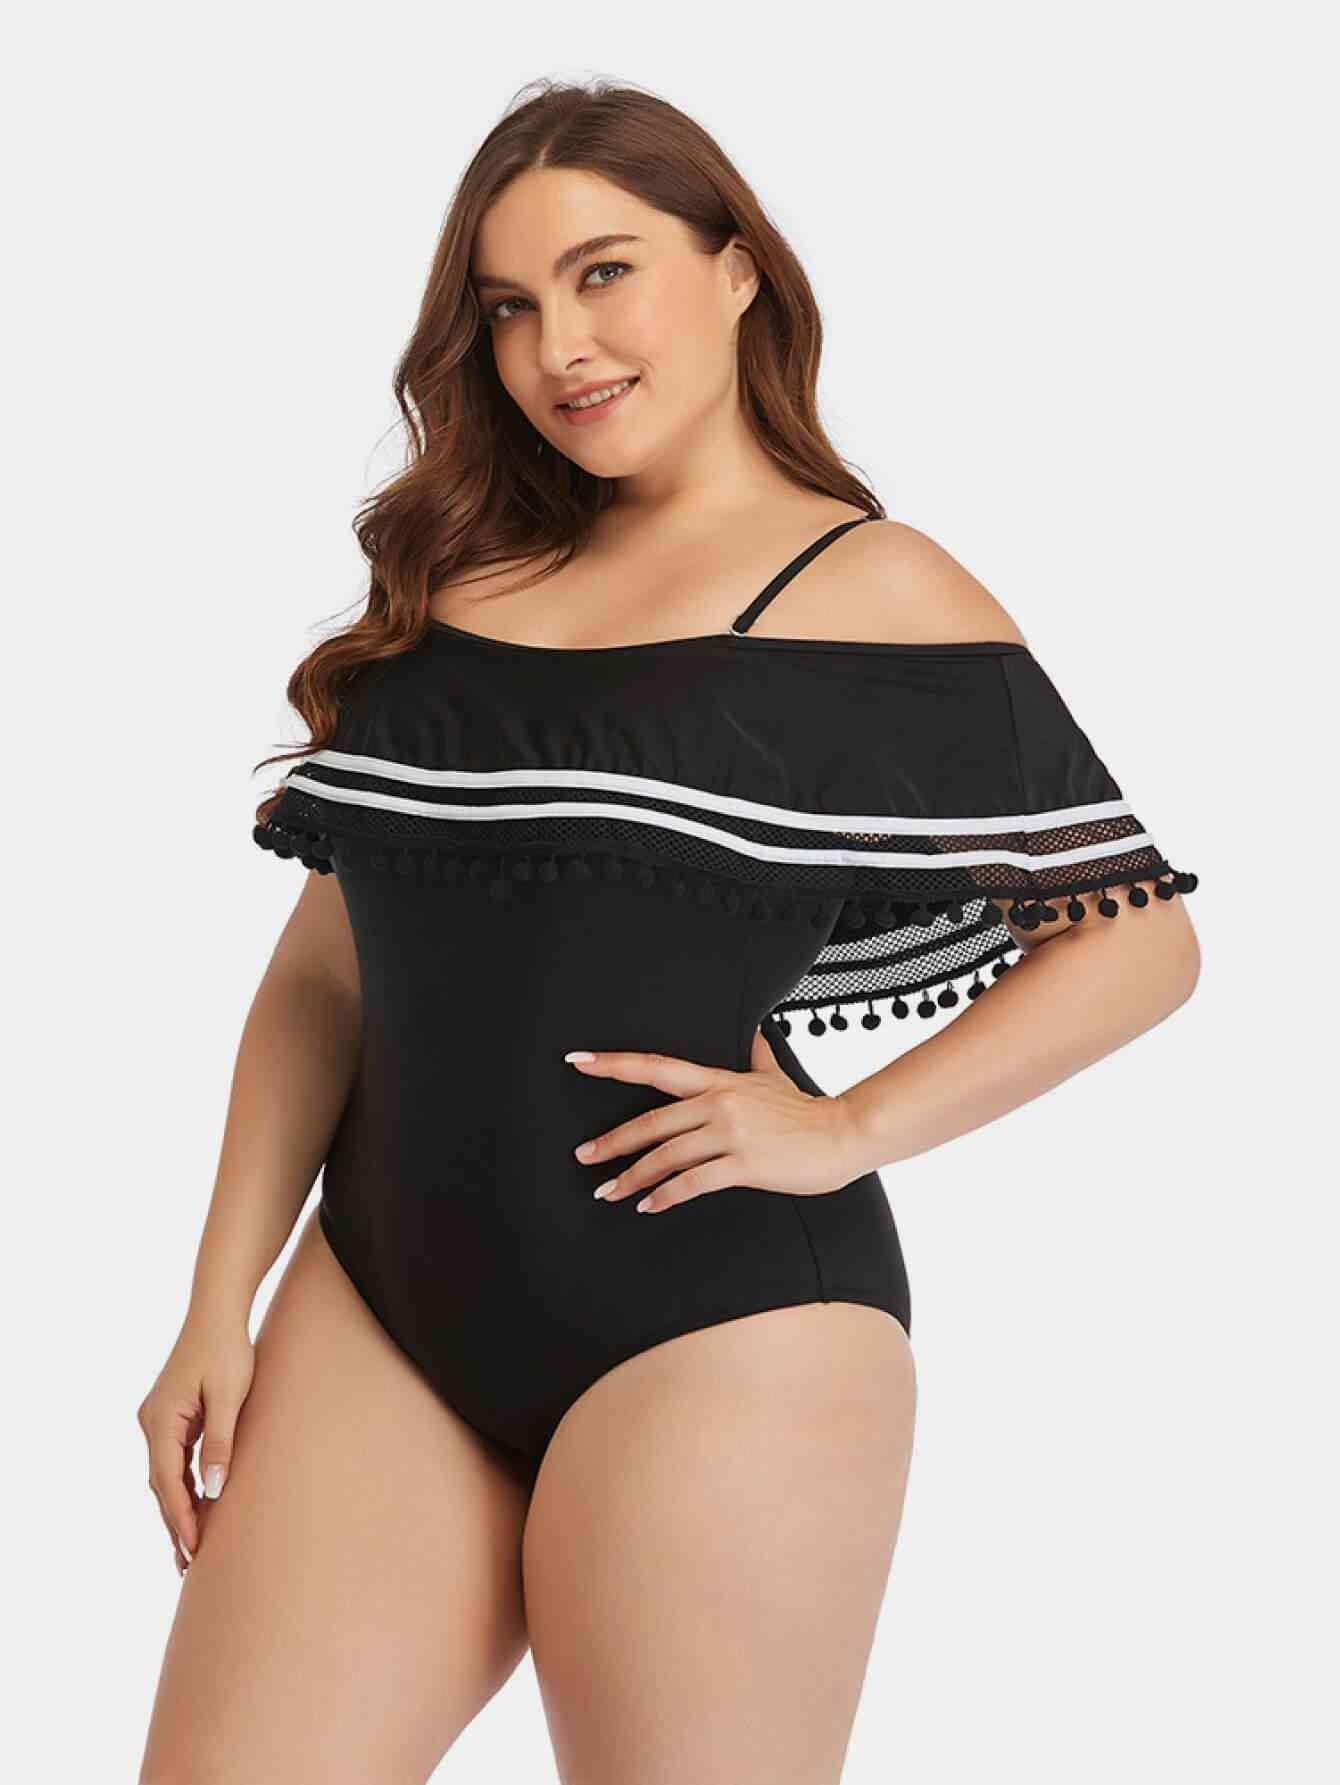 Women's Swimwear - 1PC Plus Size Striped Cold-Shoulder One-Piece Swimsuit